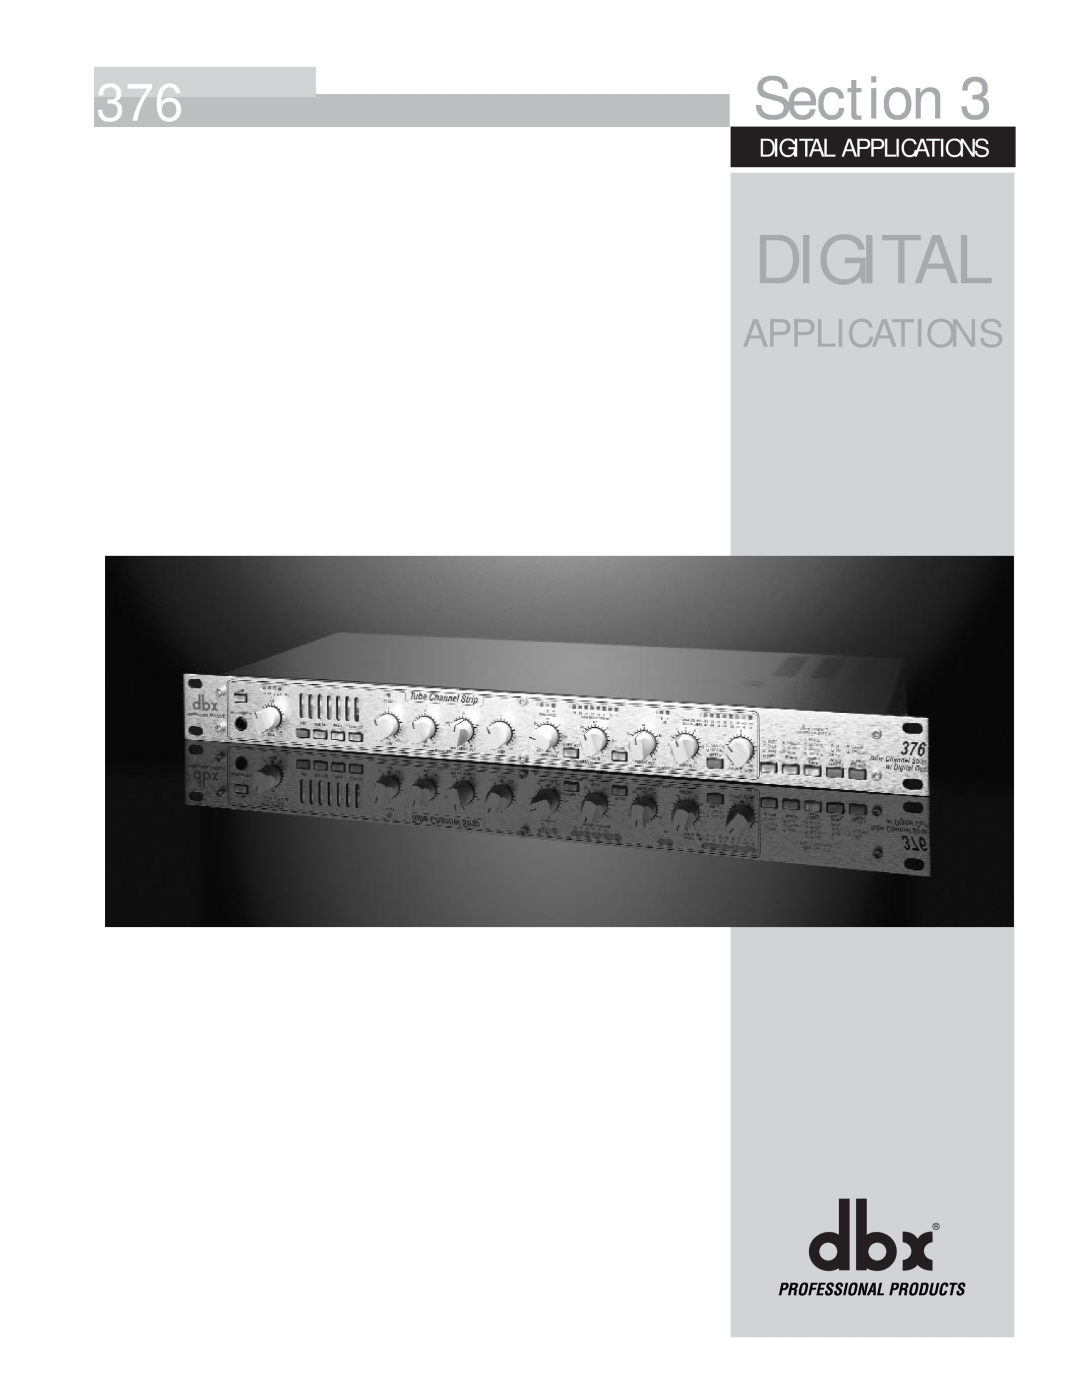 dbx Pro 376 user manual Digital Applications, Section 